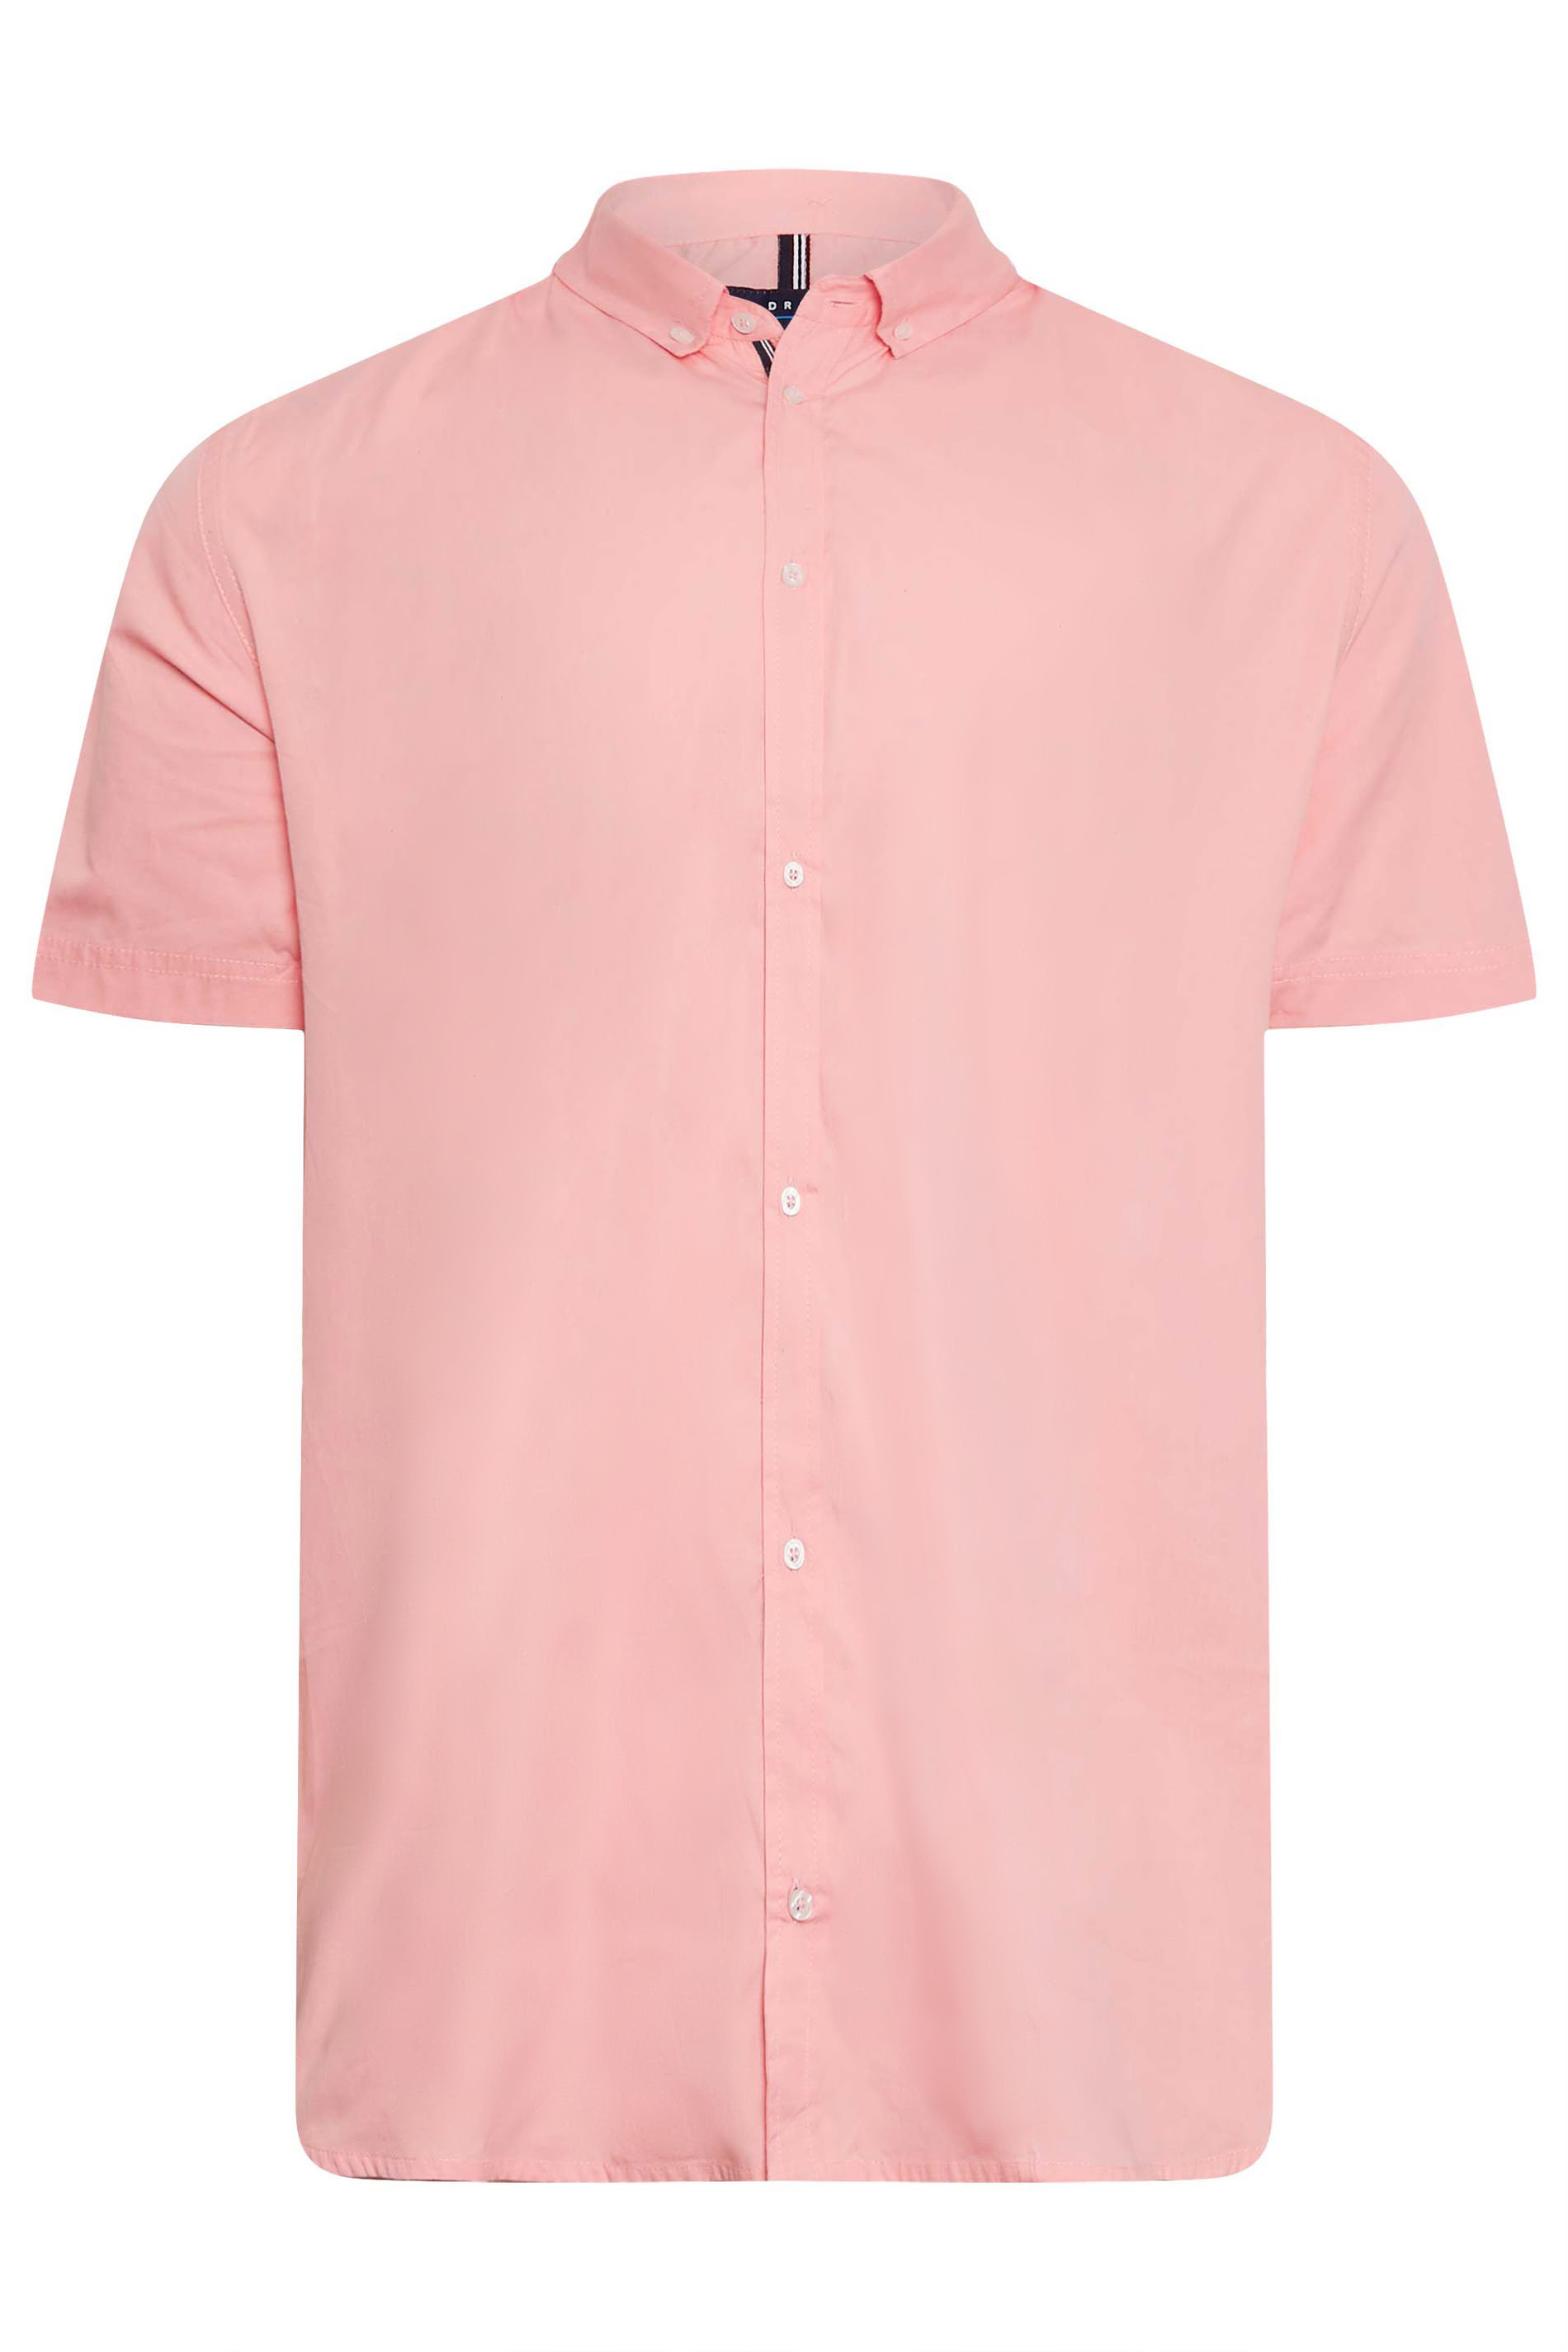 BadRhino Big & Tall Pink Poplin Shirt | BadRhino 2